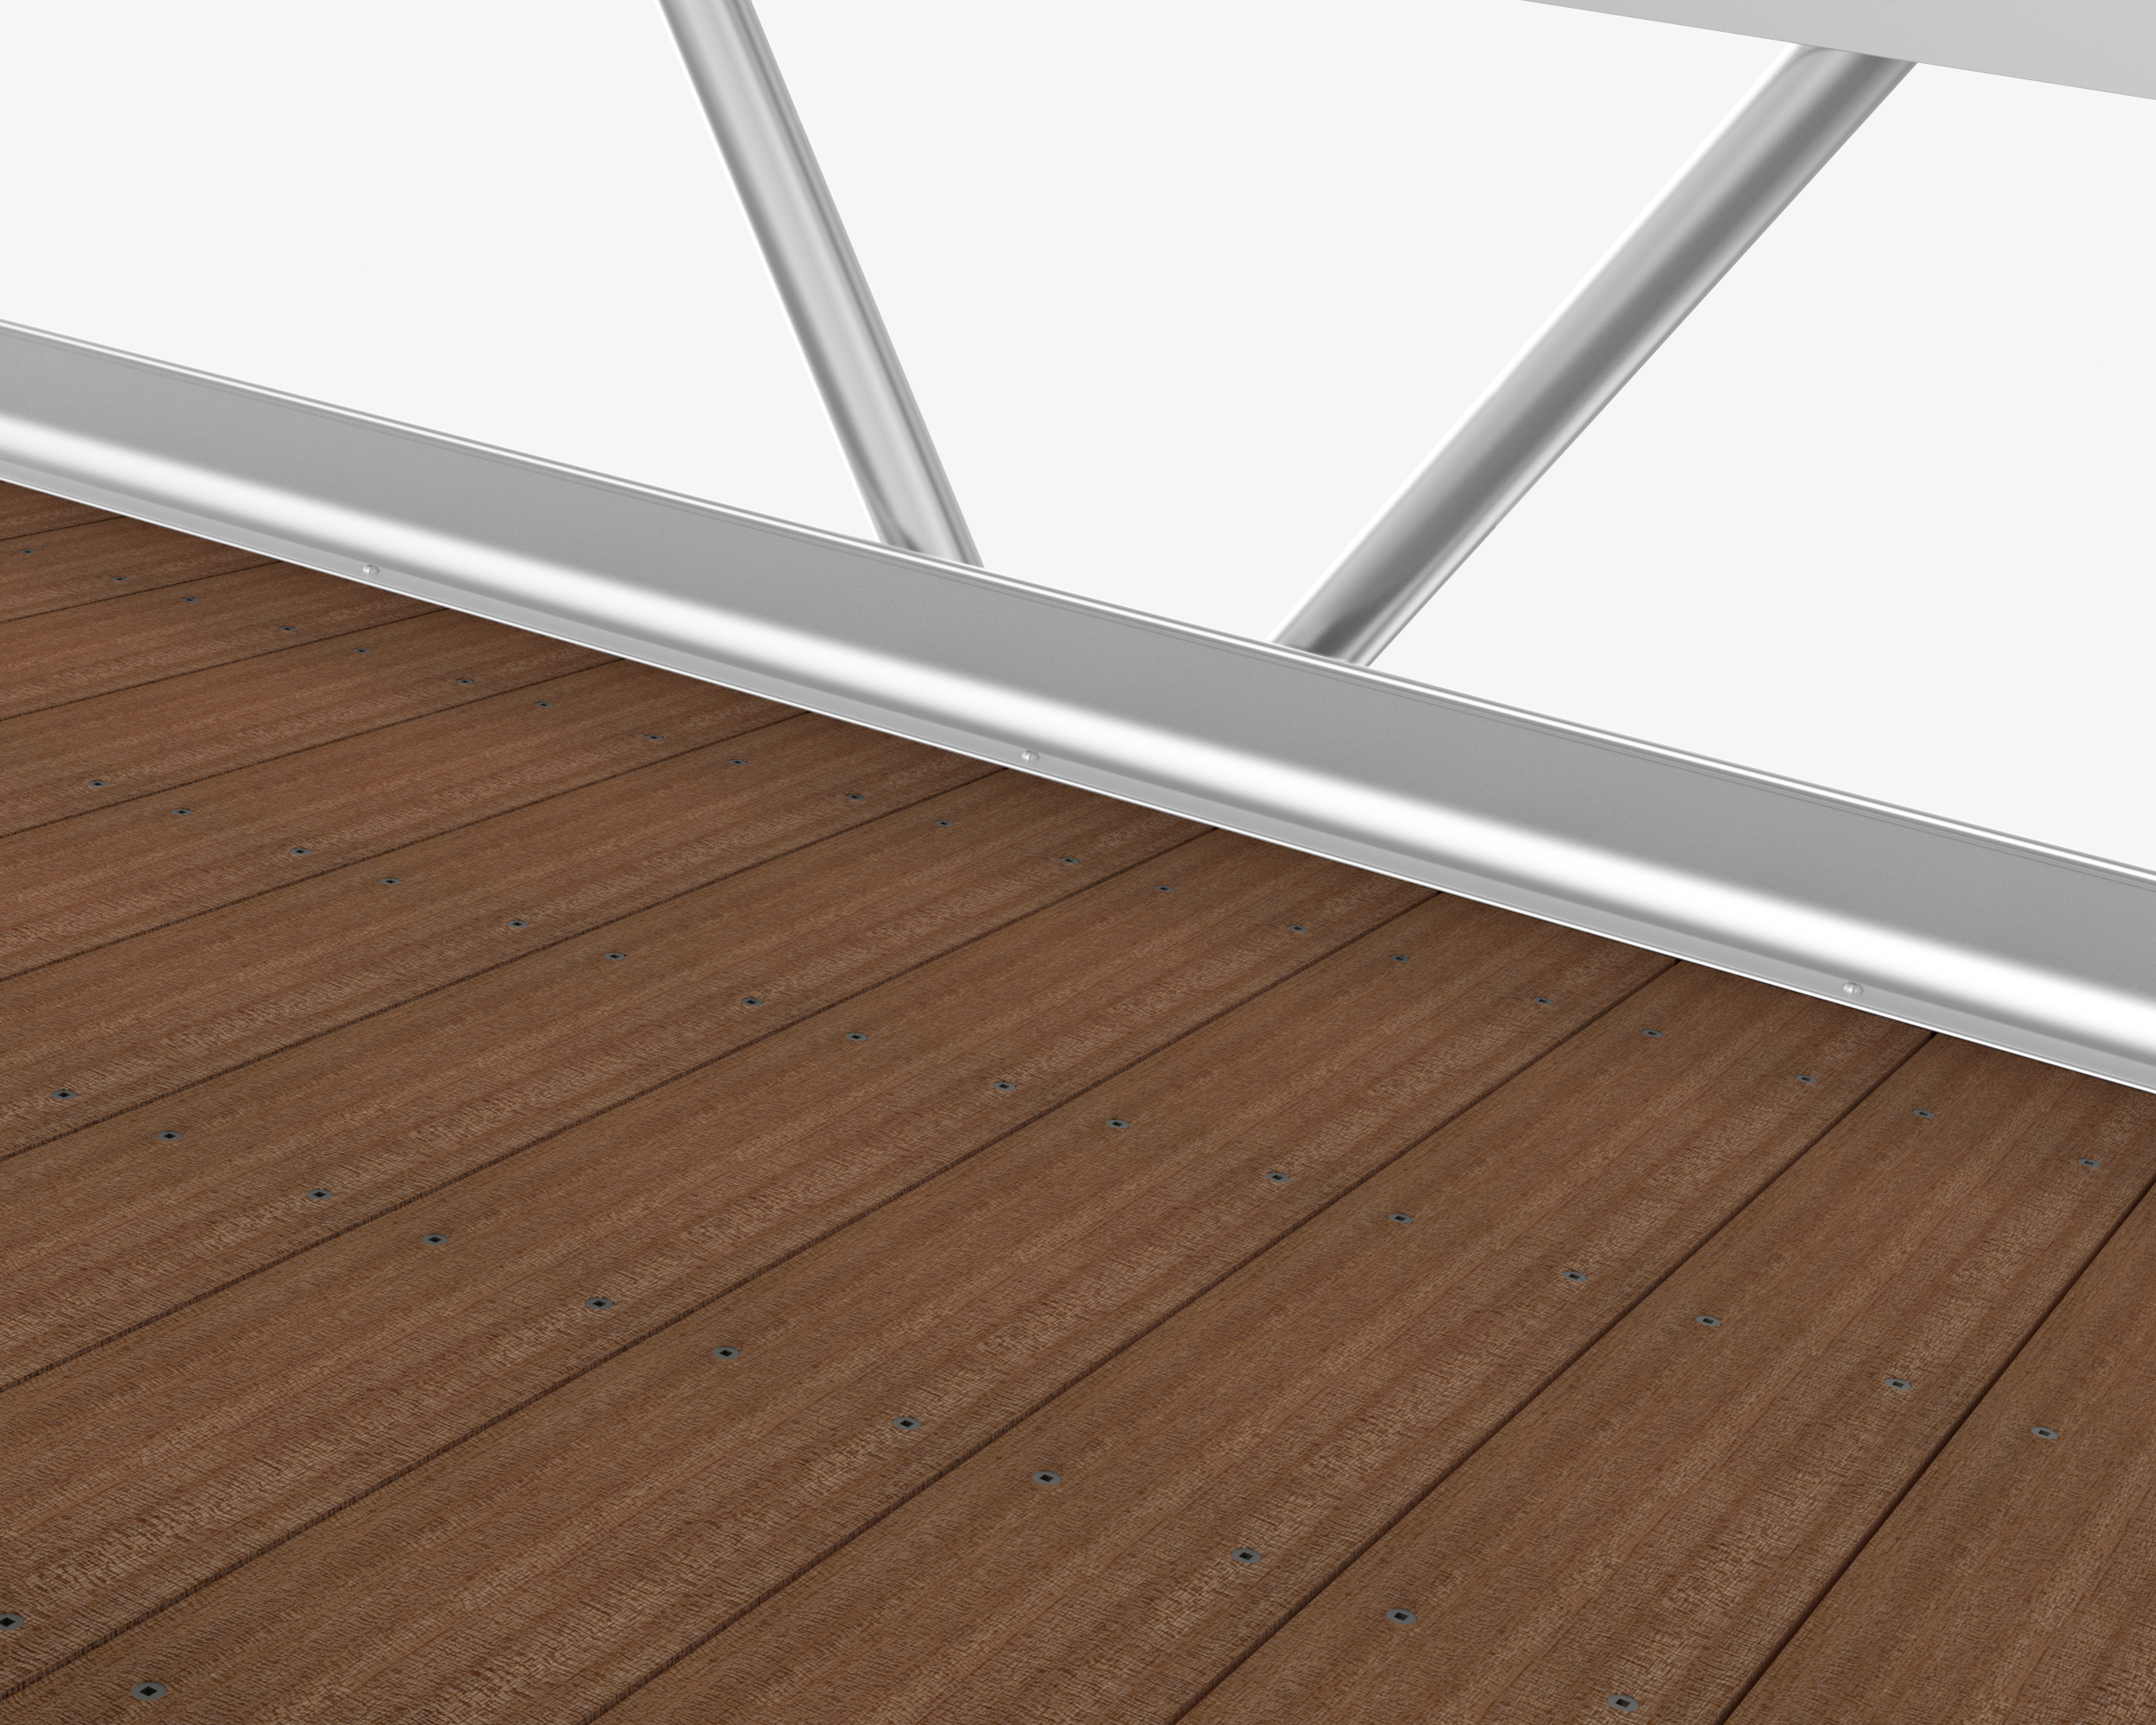 Ipe hardwood decking with integrated aluminum kick plate